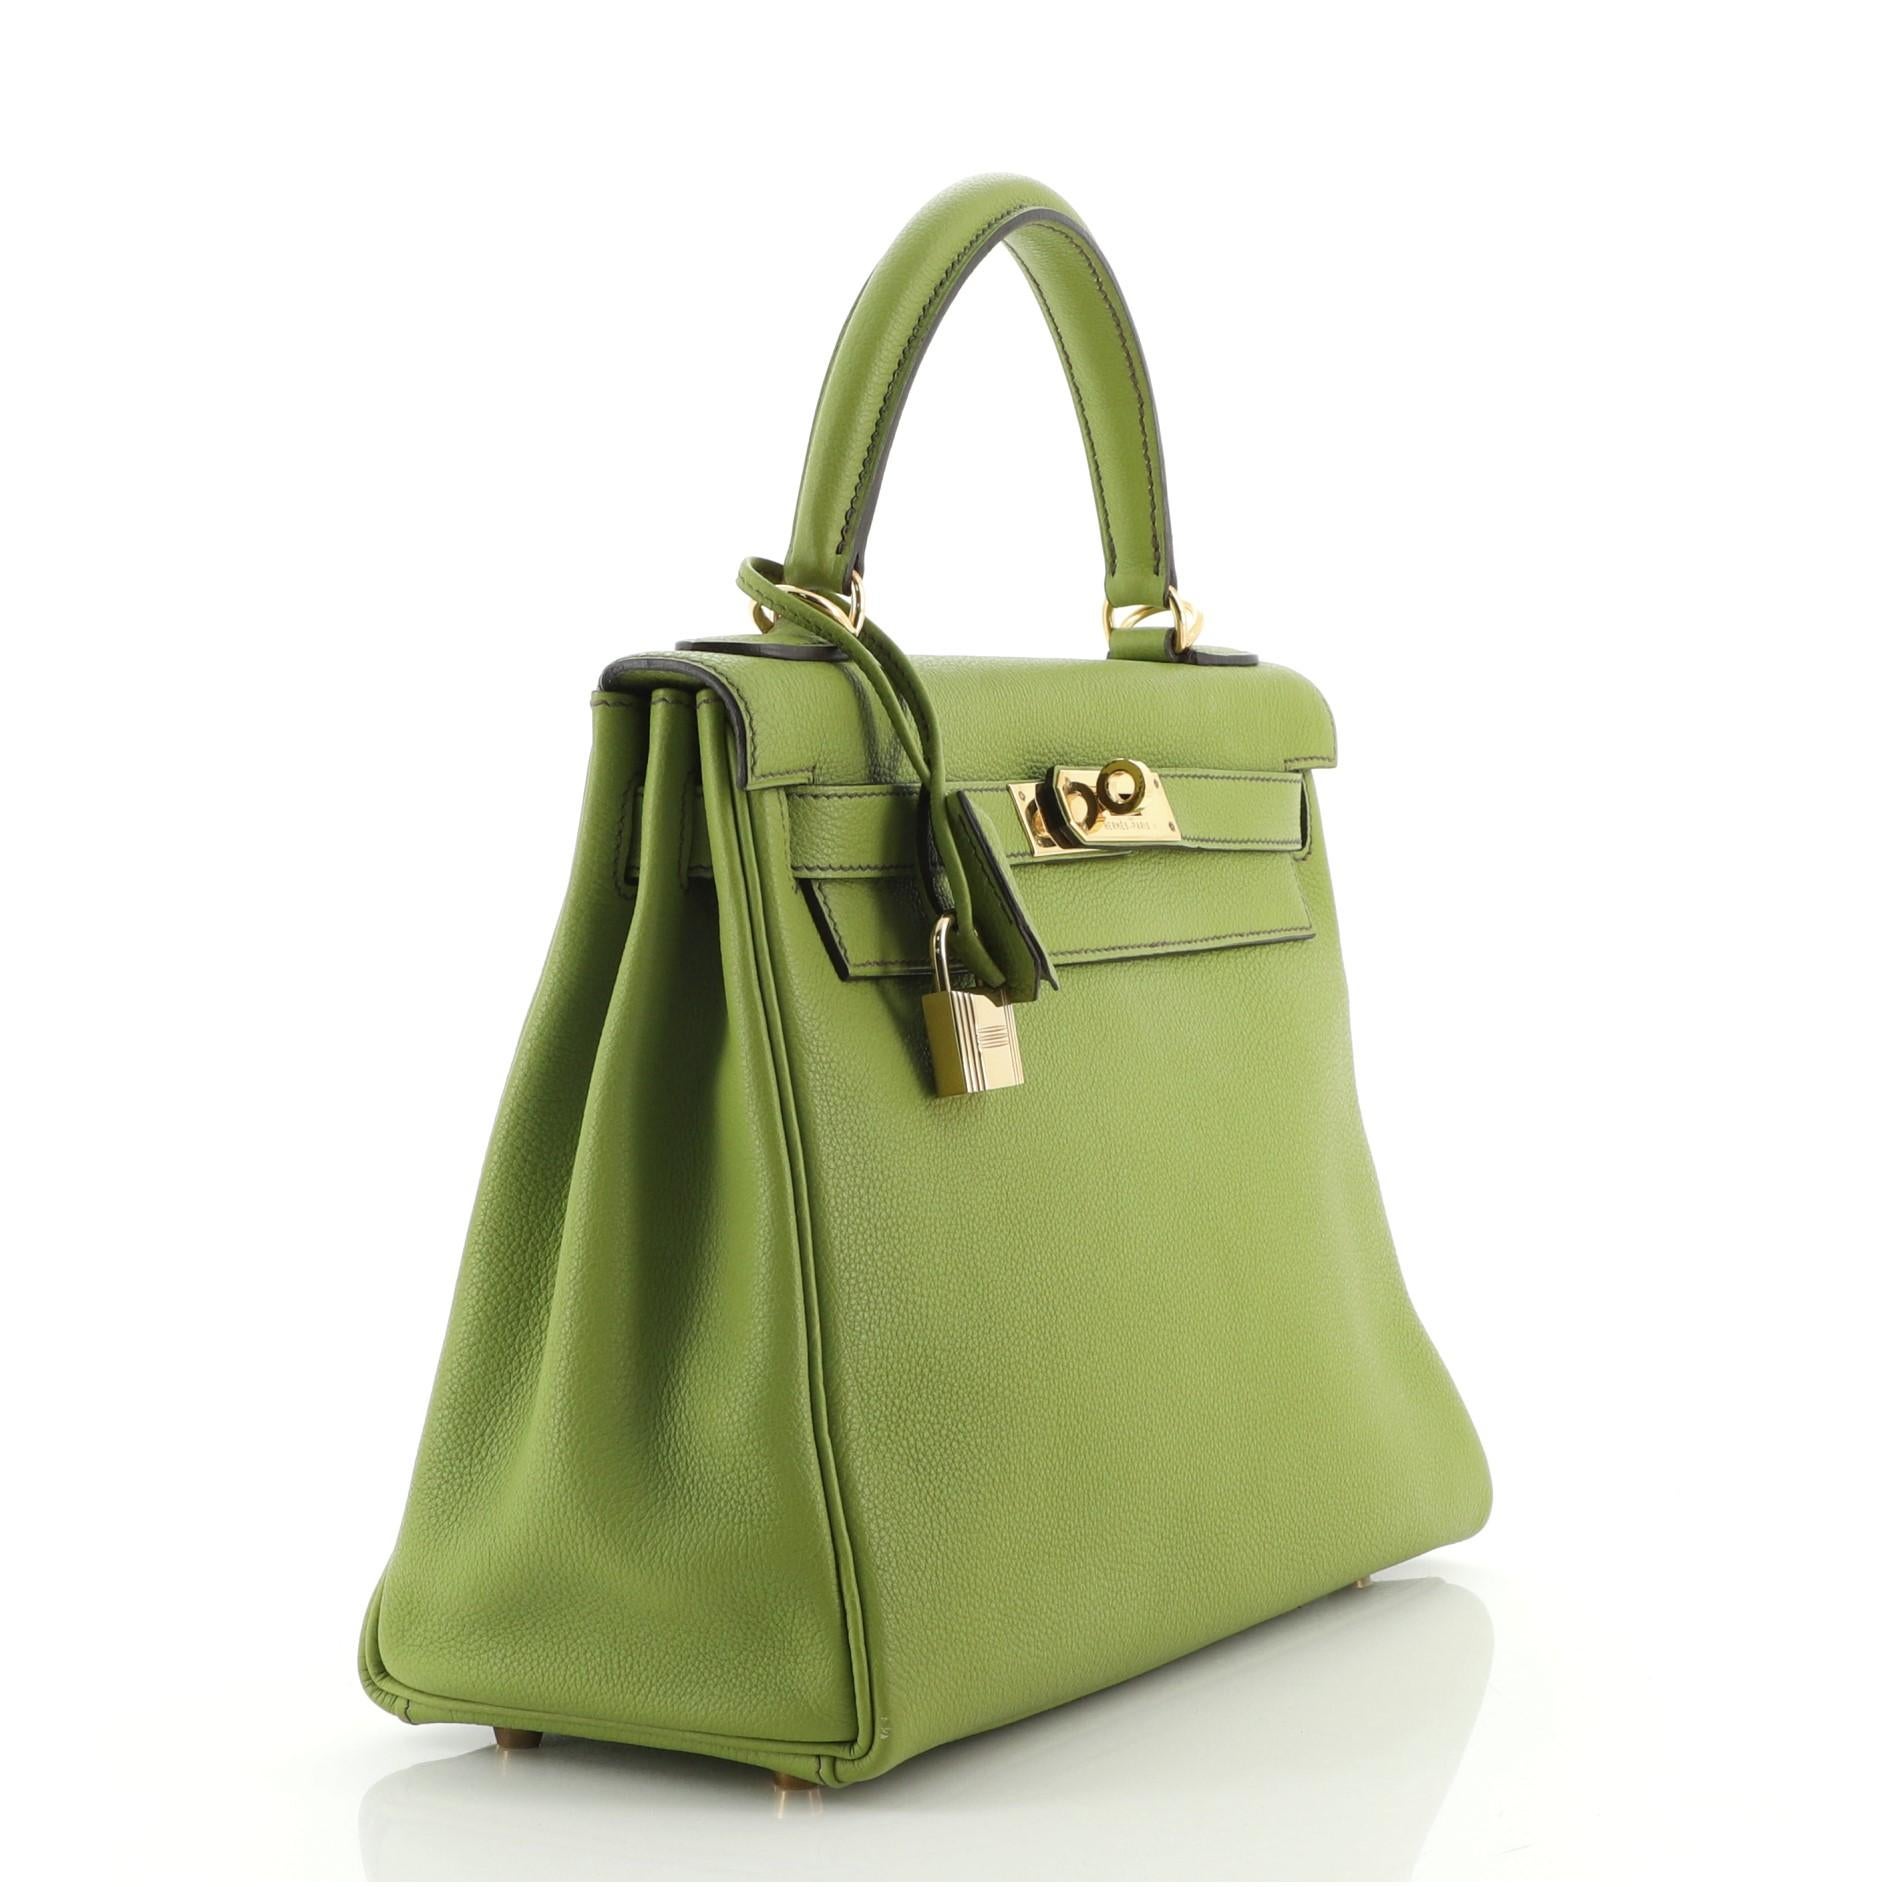 Brown Hermes Kelly Handbag Vert Anis Togo with Gold Hardware 28